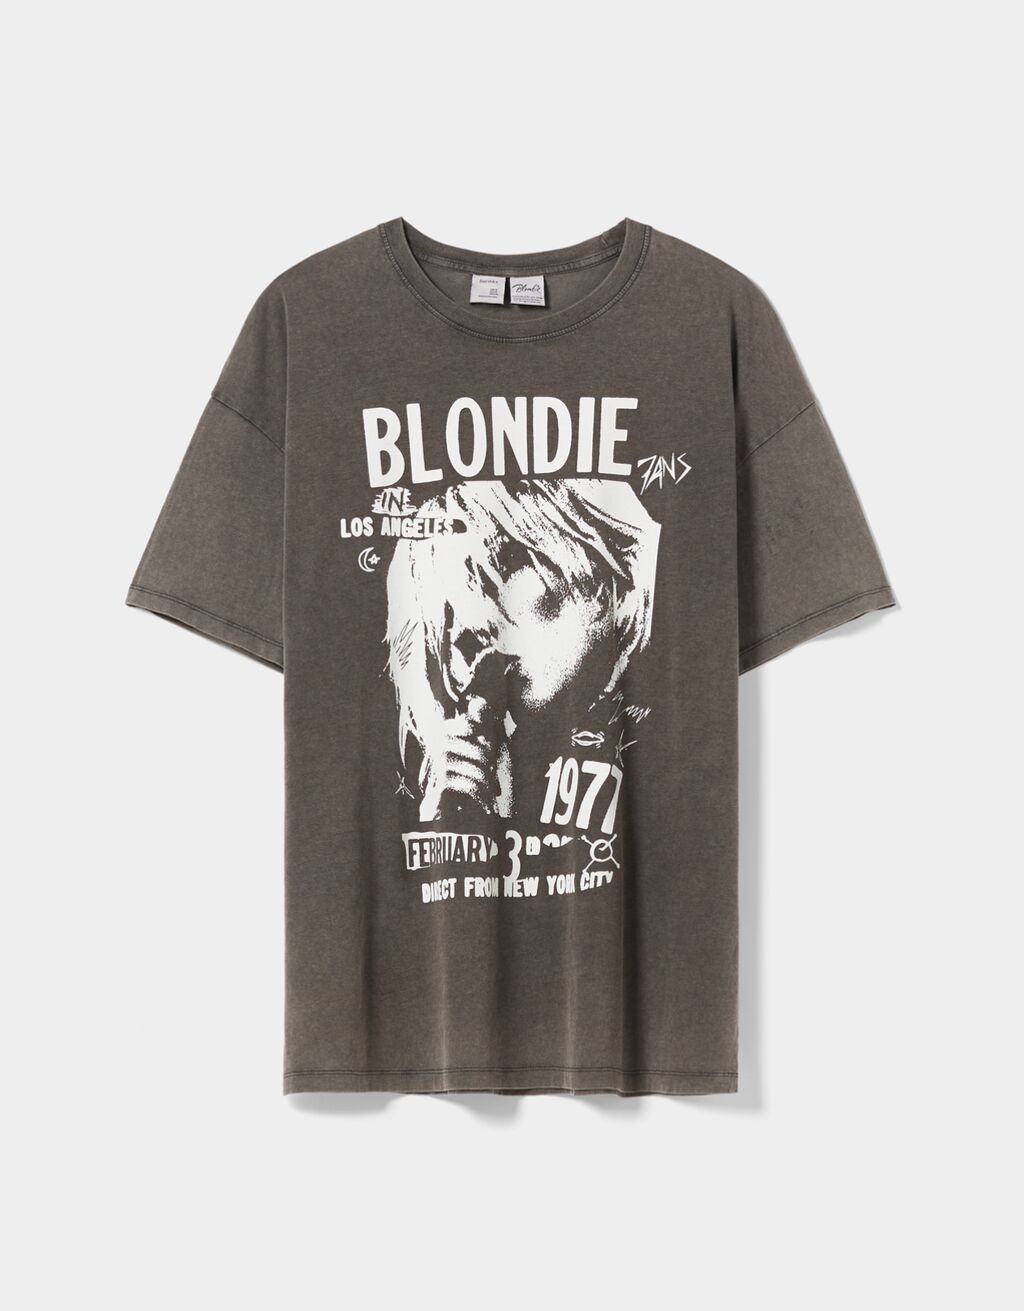 Kaus bergambar Blondie lengan pendek